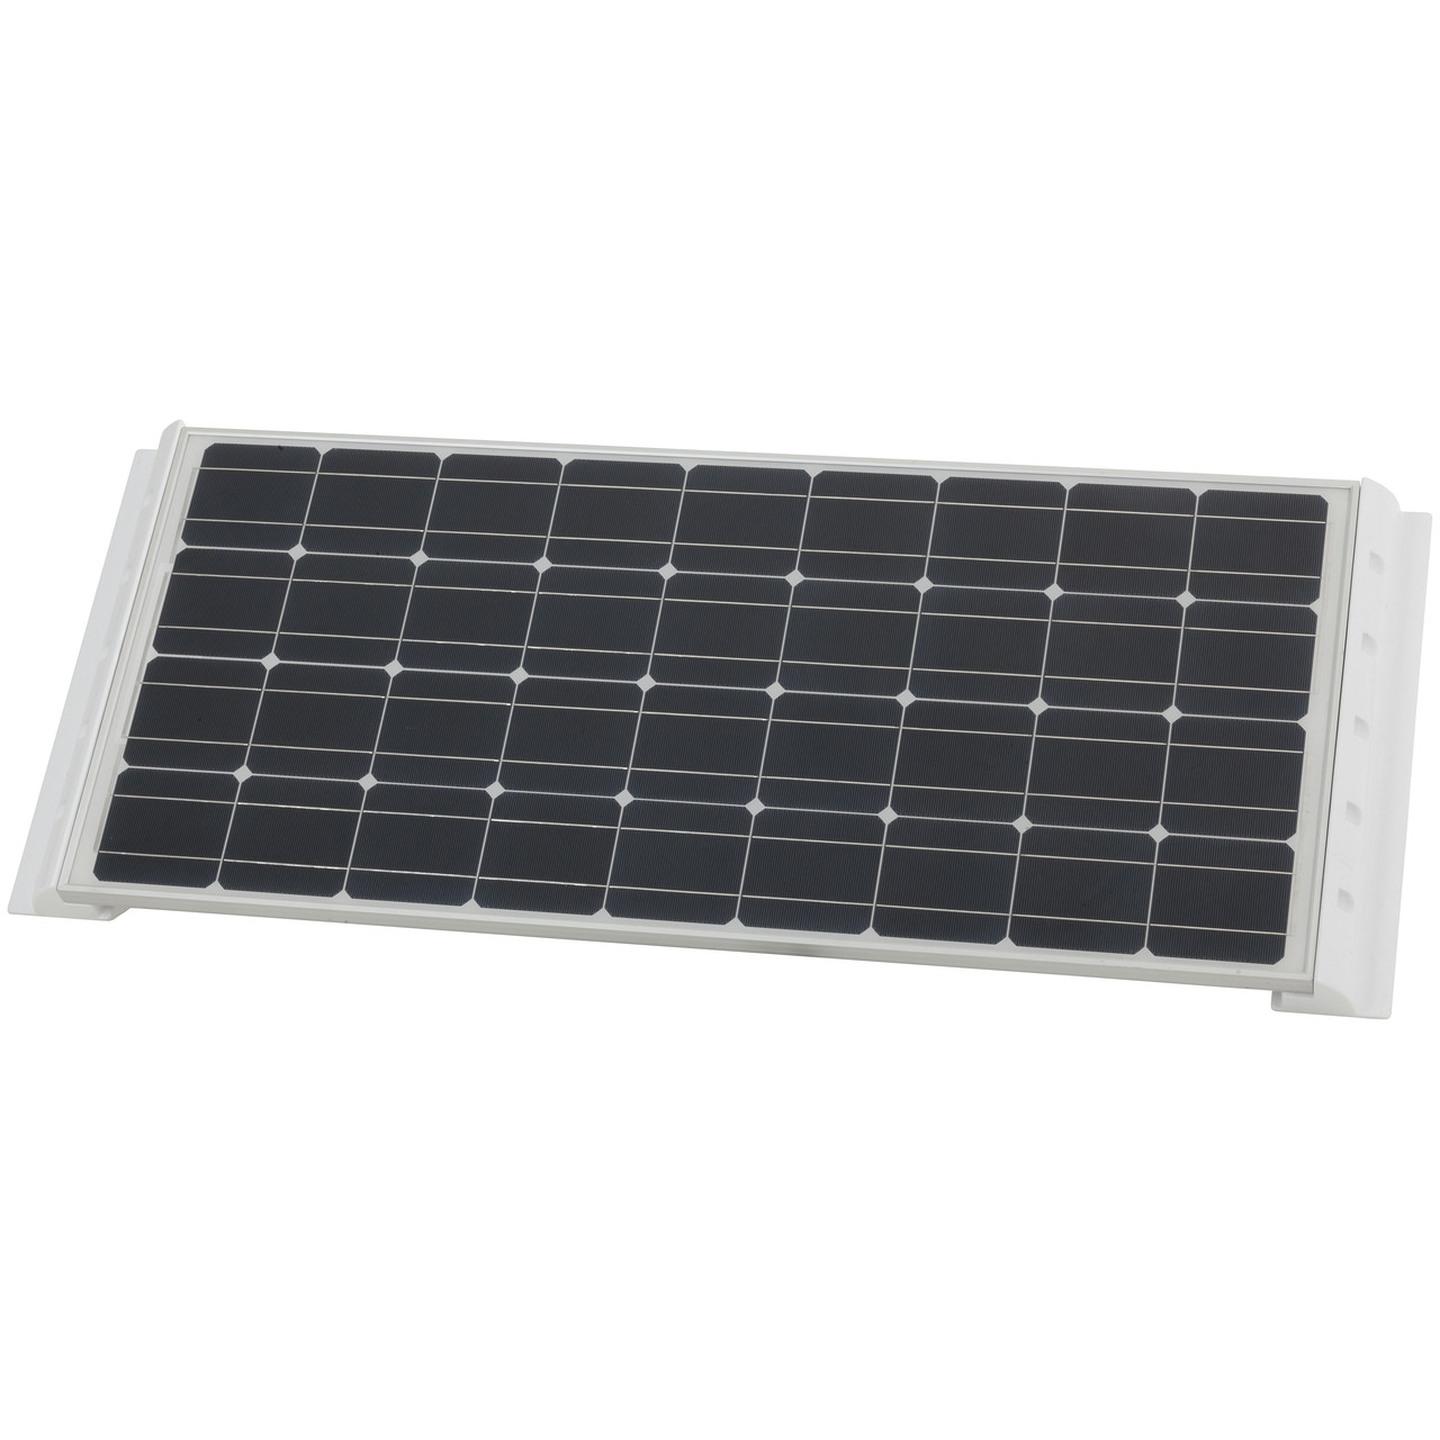 White ABS Solar Panel Spoiler Mounting Brackets - Pair